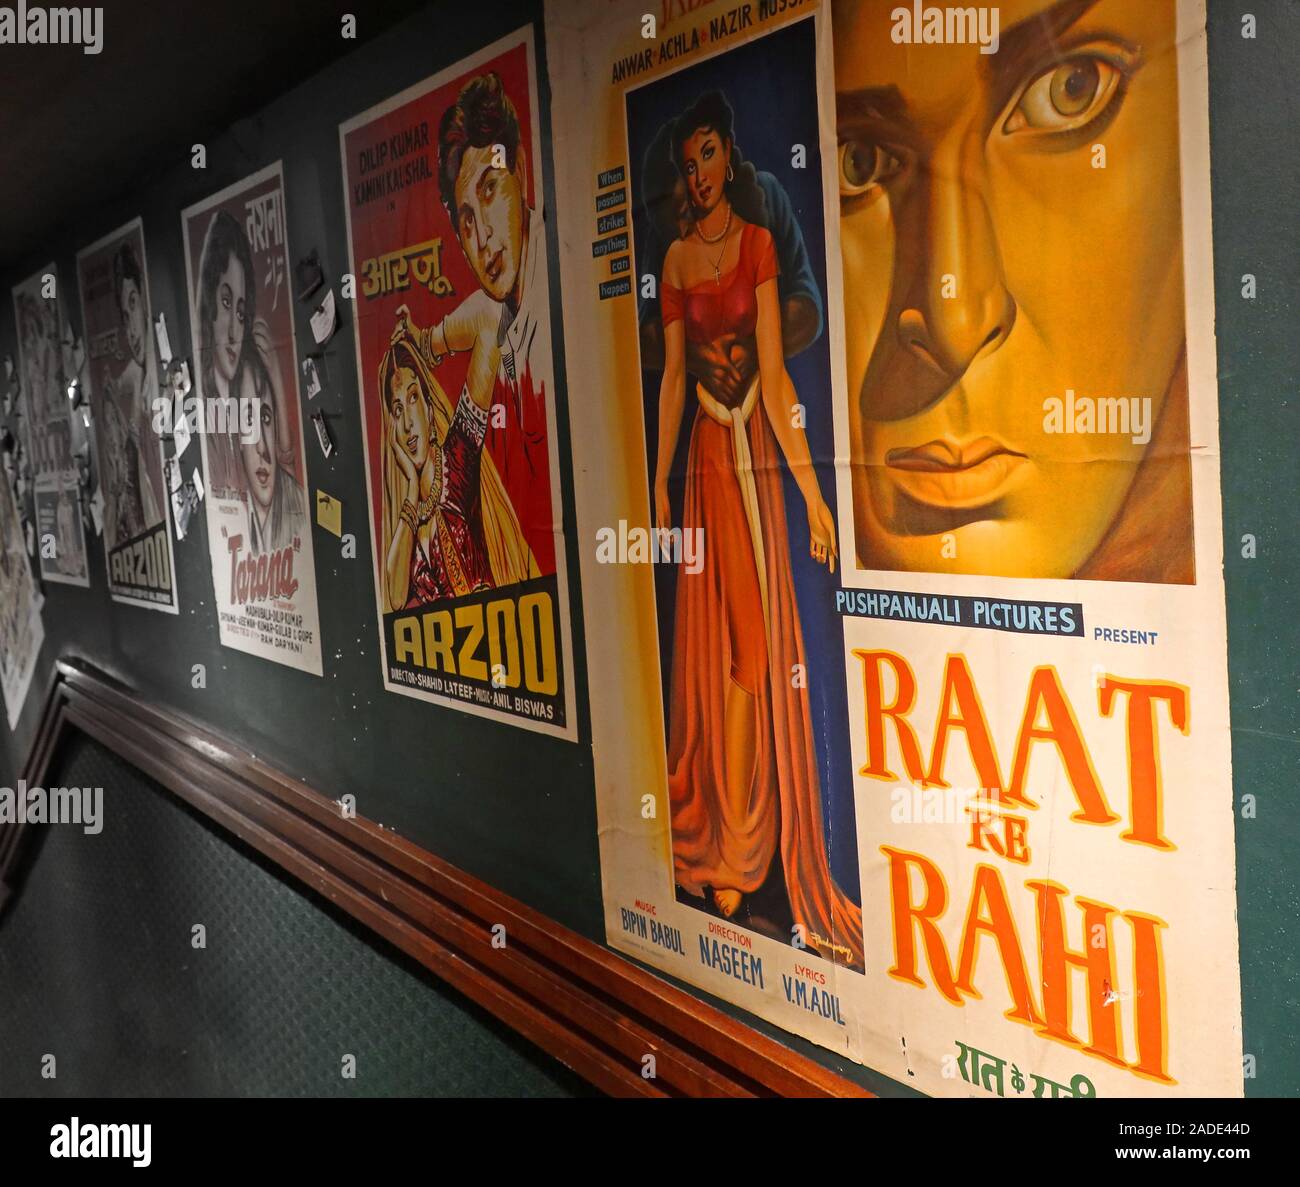 Bollywood cinema posters, on a hall wall, hallway - Raat Ke Rahi,Pushpanjali Pictures,Naseem,VM Adil,Arzoo films Stock Photo